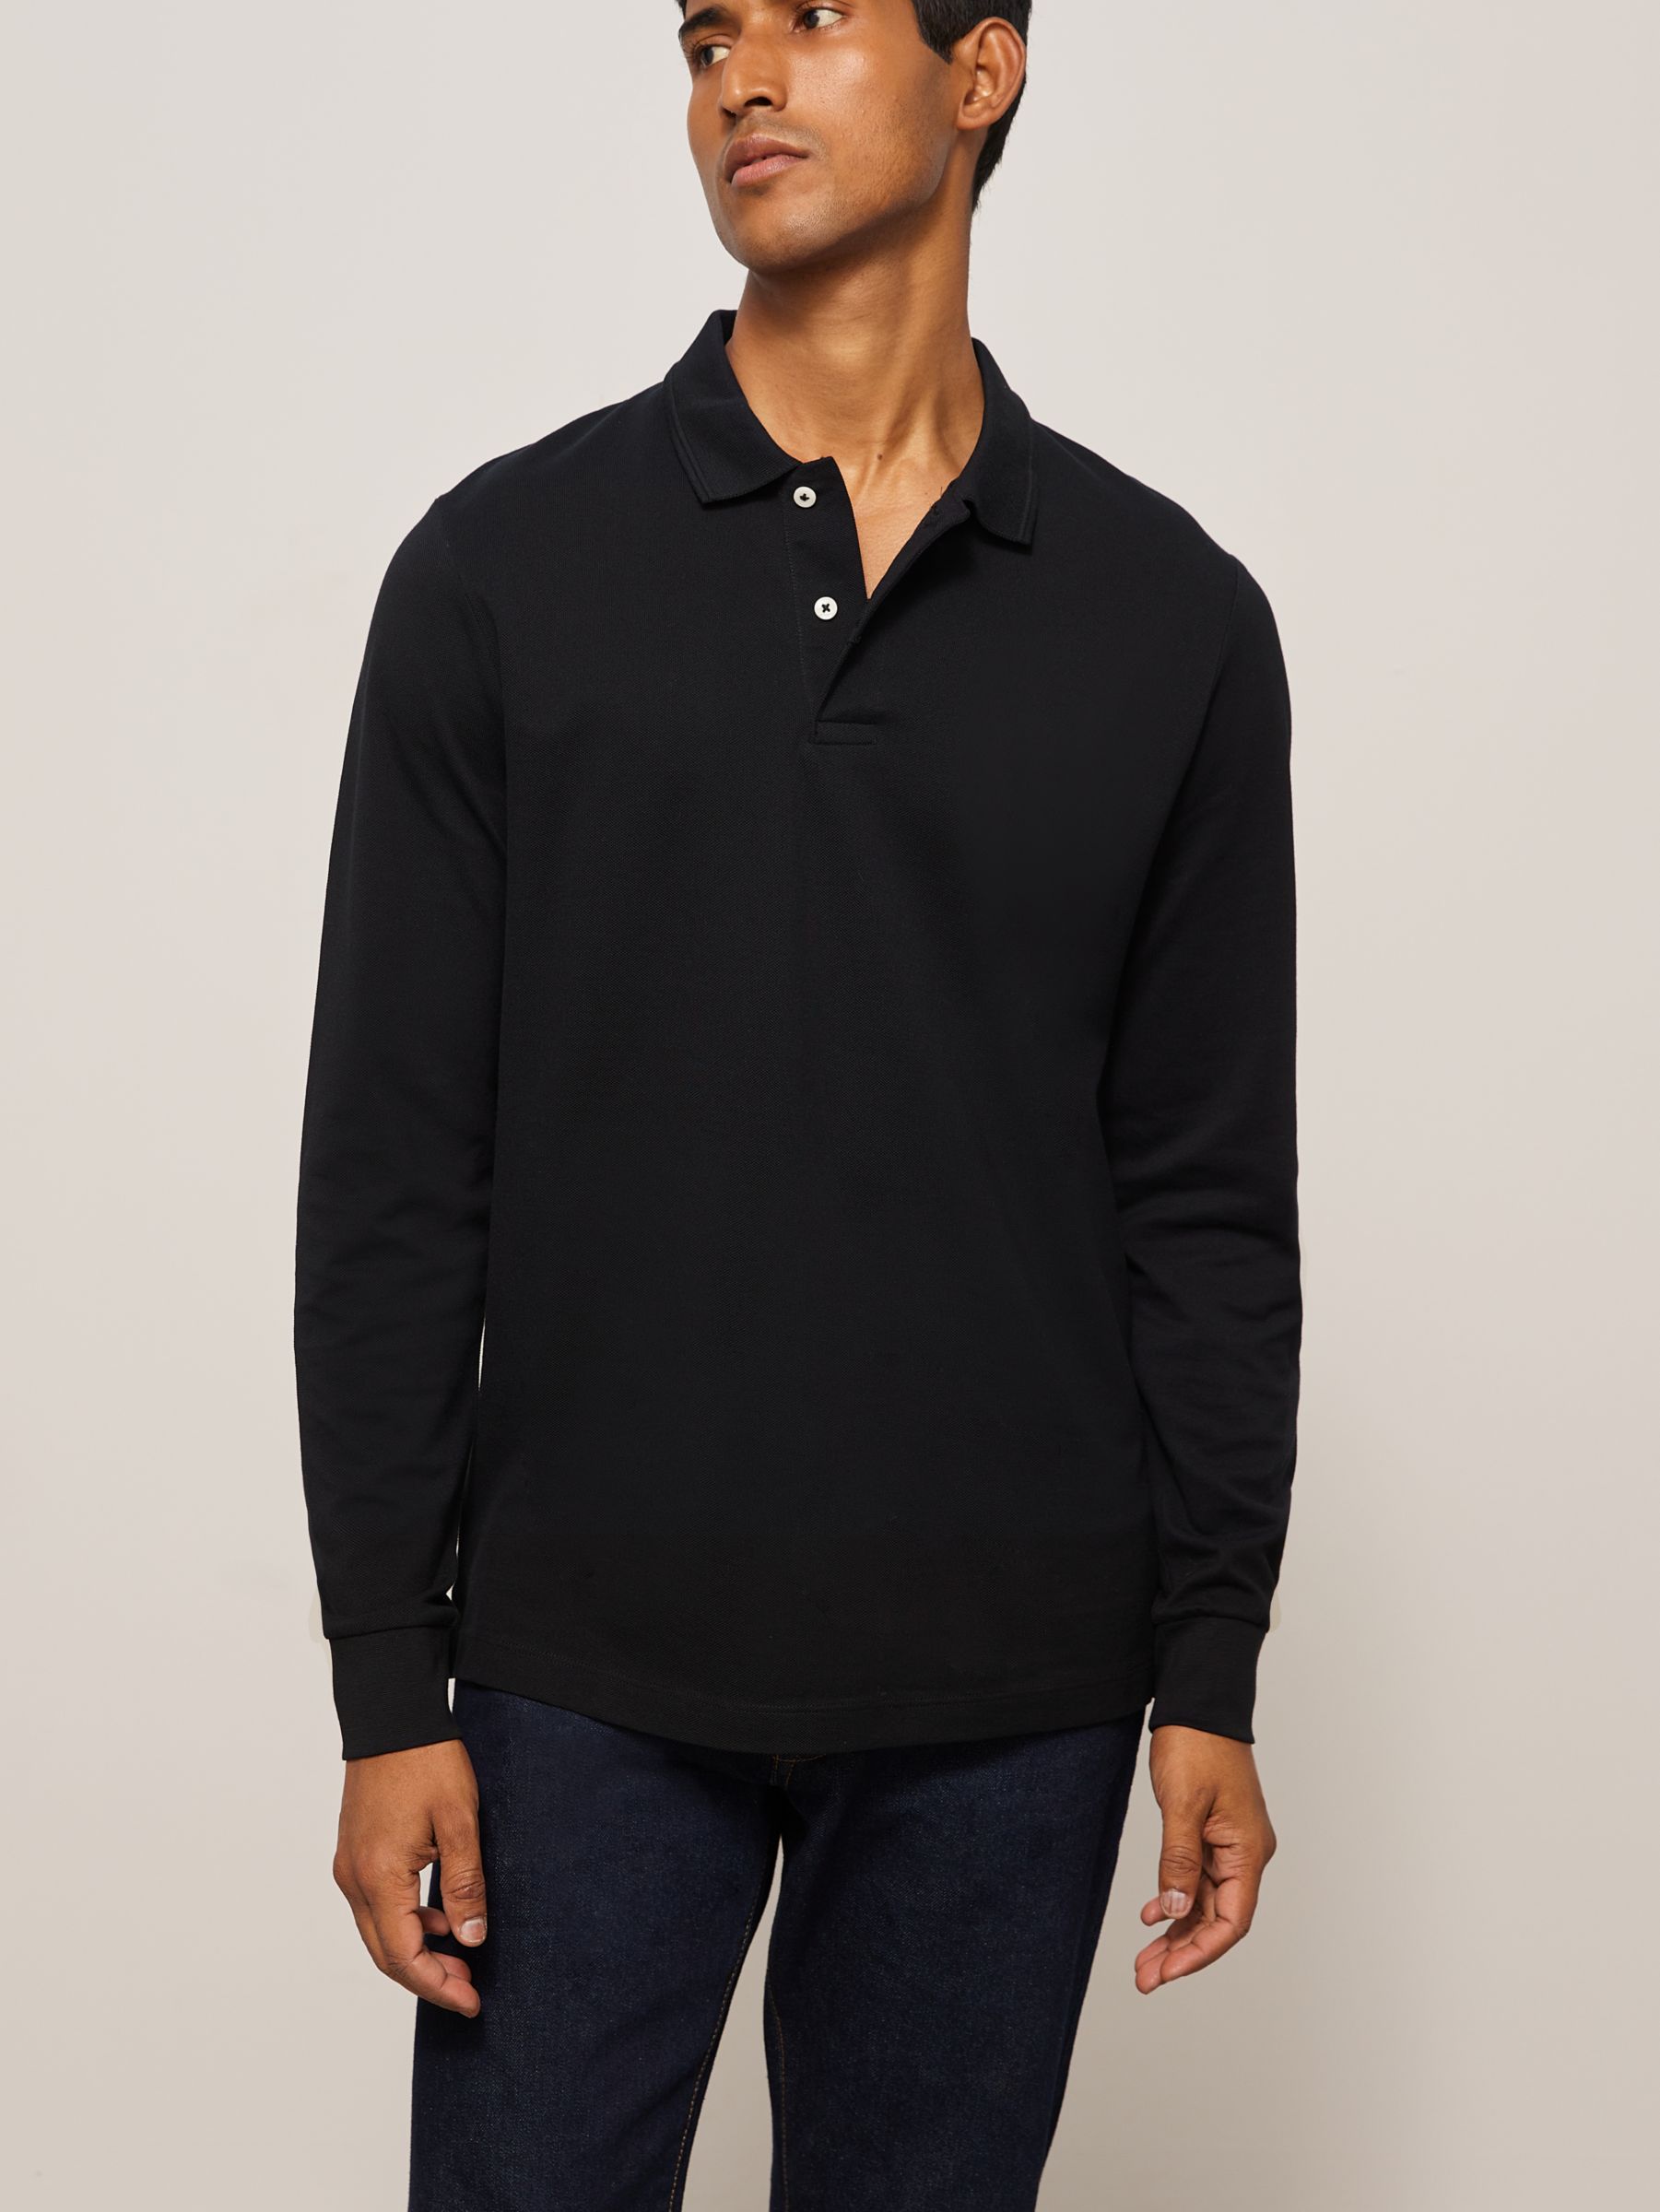 John Lewis Supima Cotton Long Sleeve Jersey Polo Shirt, Black at John Lewis  u0026 Partners